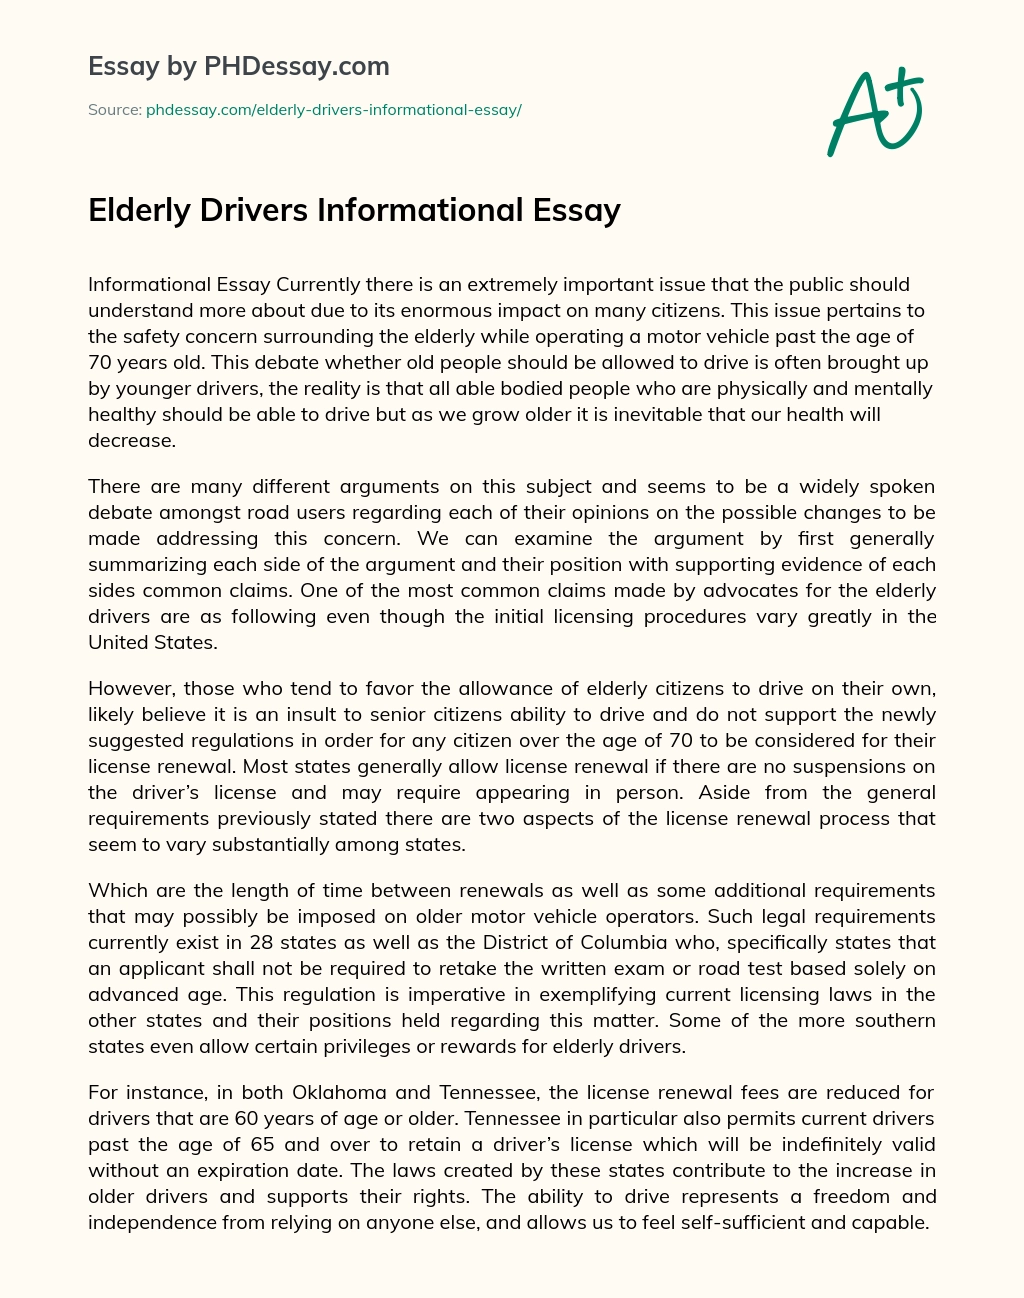 Elderly Drivers Informational Essay essay